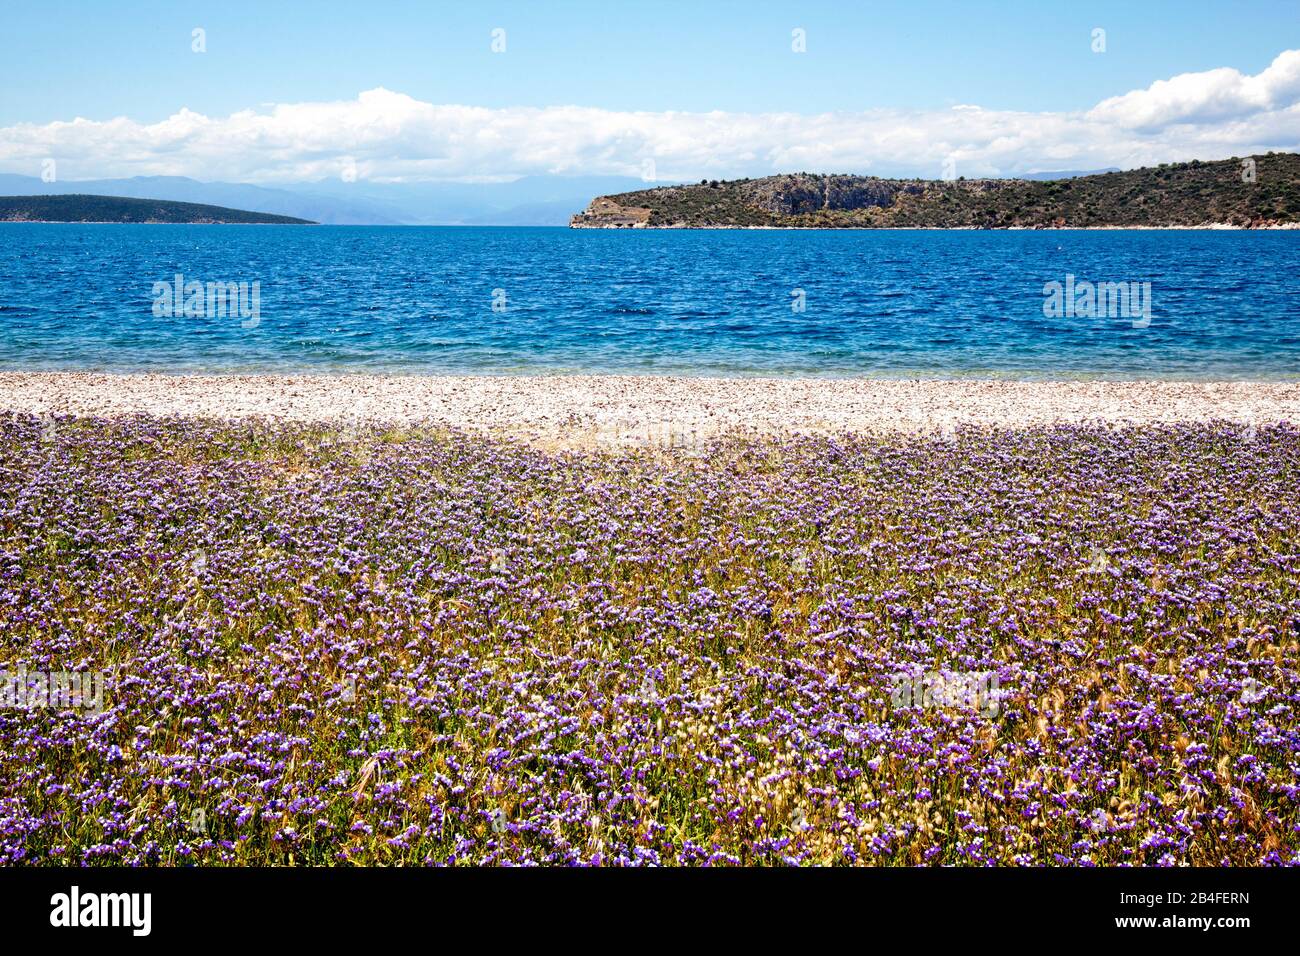 Beach lilac covers a beach in the Argolic Gulf, limonium, peninsula Peloponnese, Greece Stock Photo